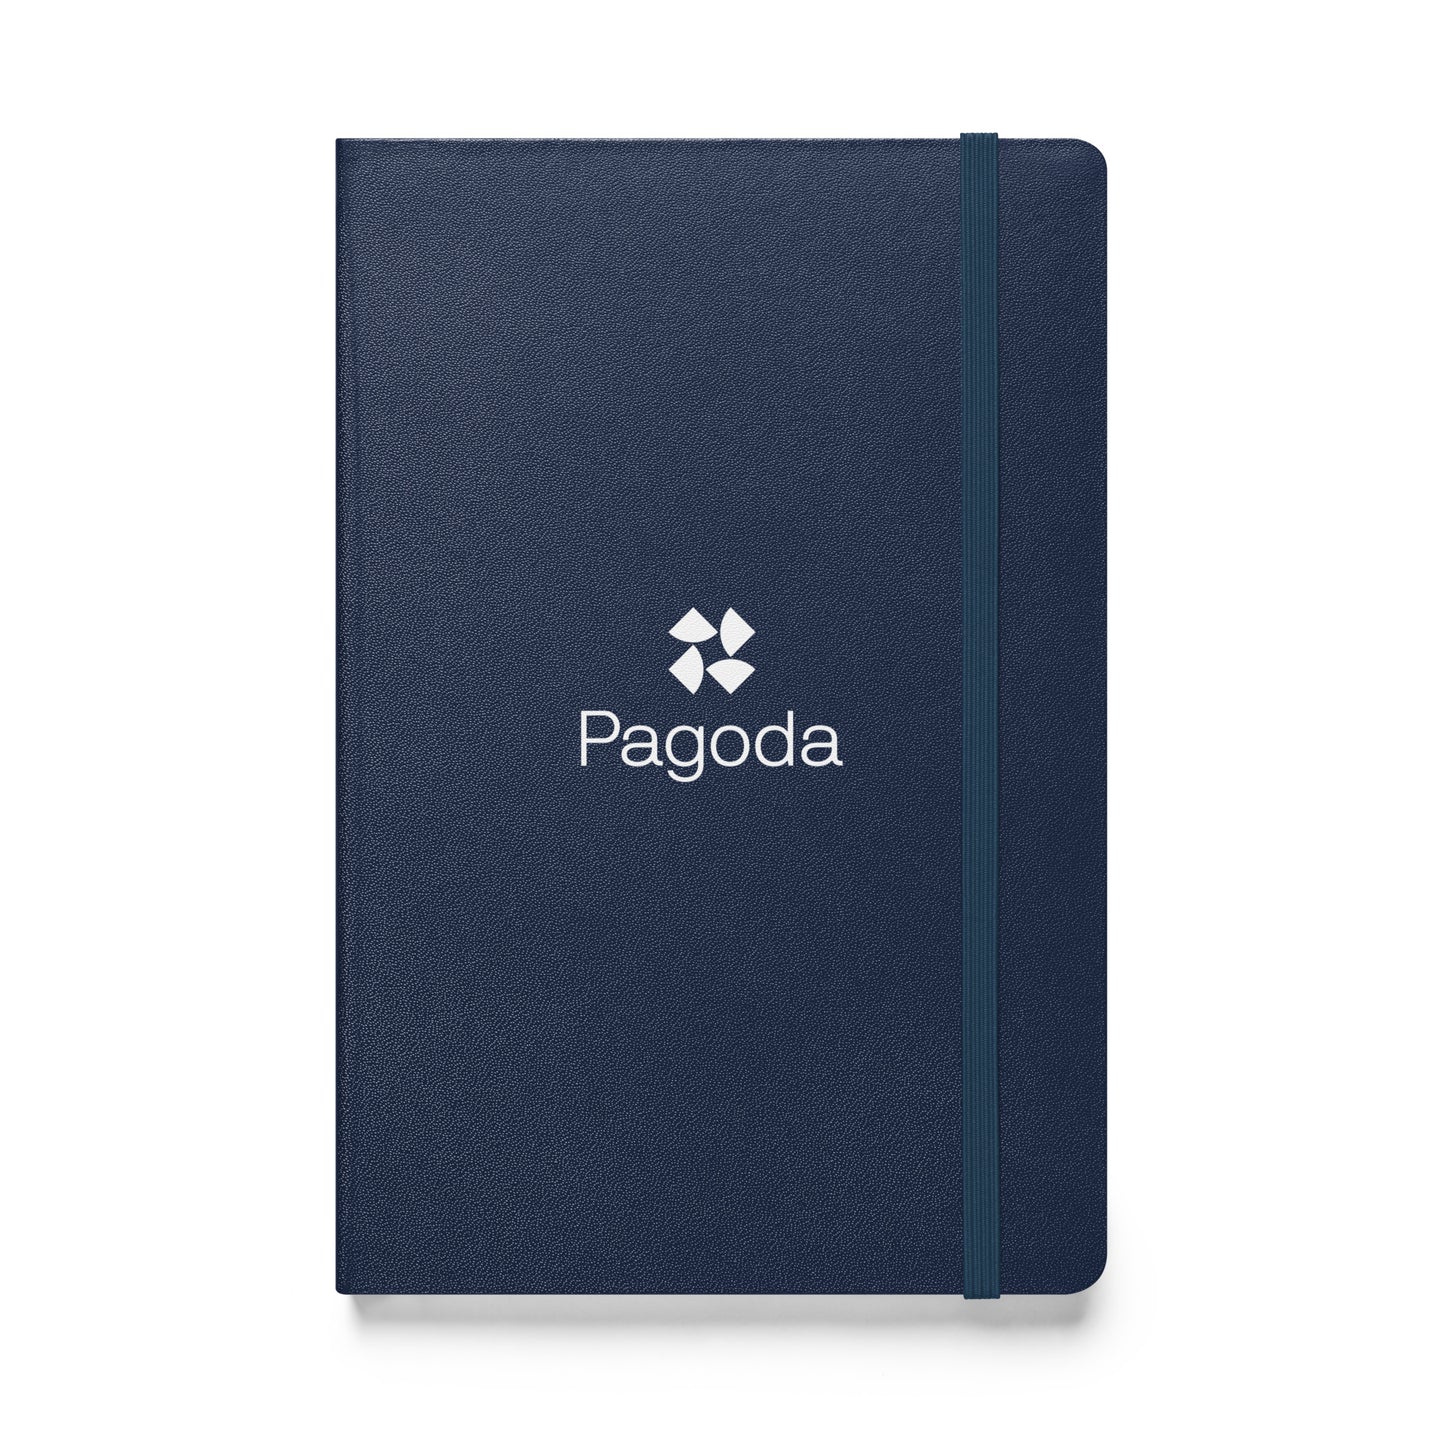 Pagoda Hardcover bound notebook